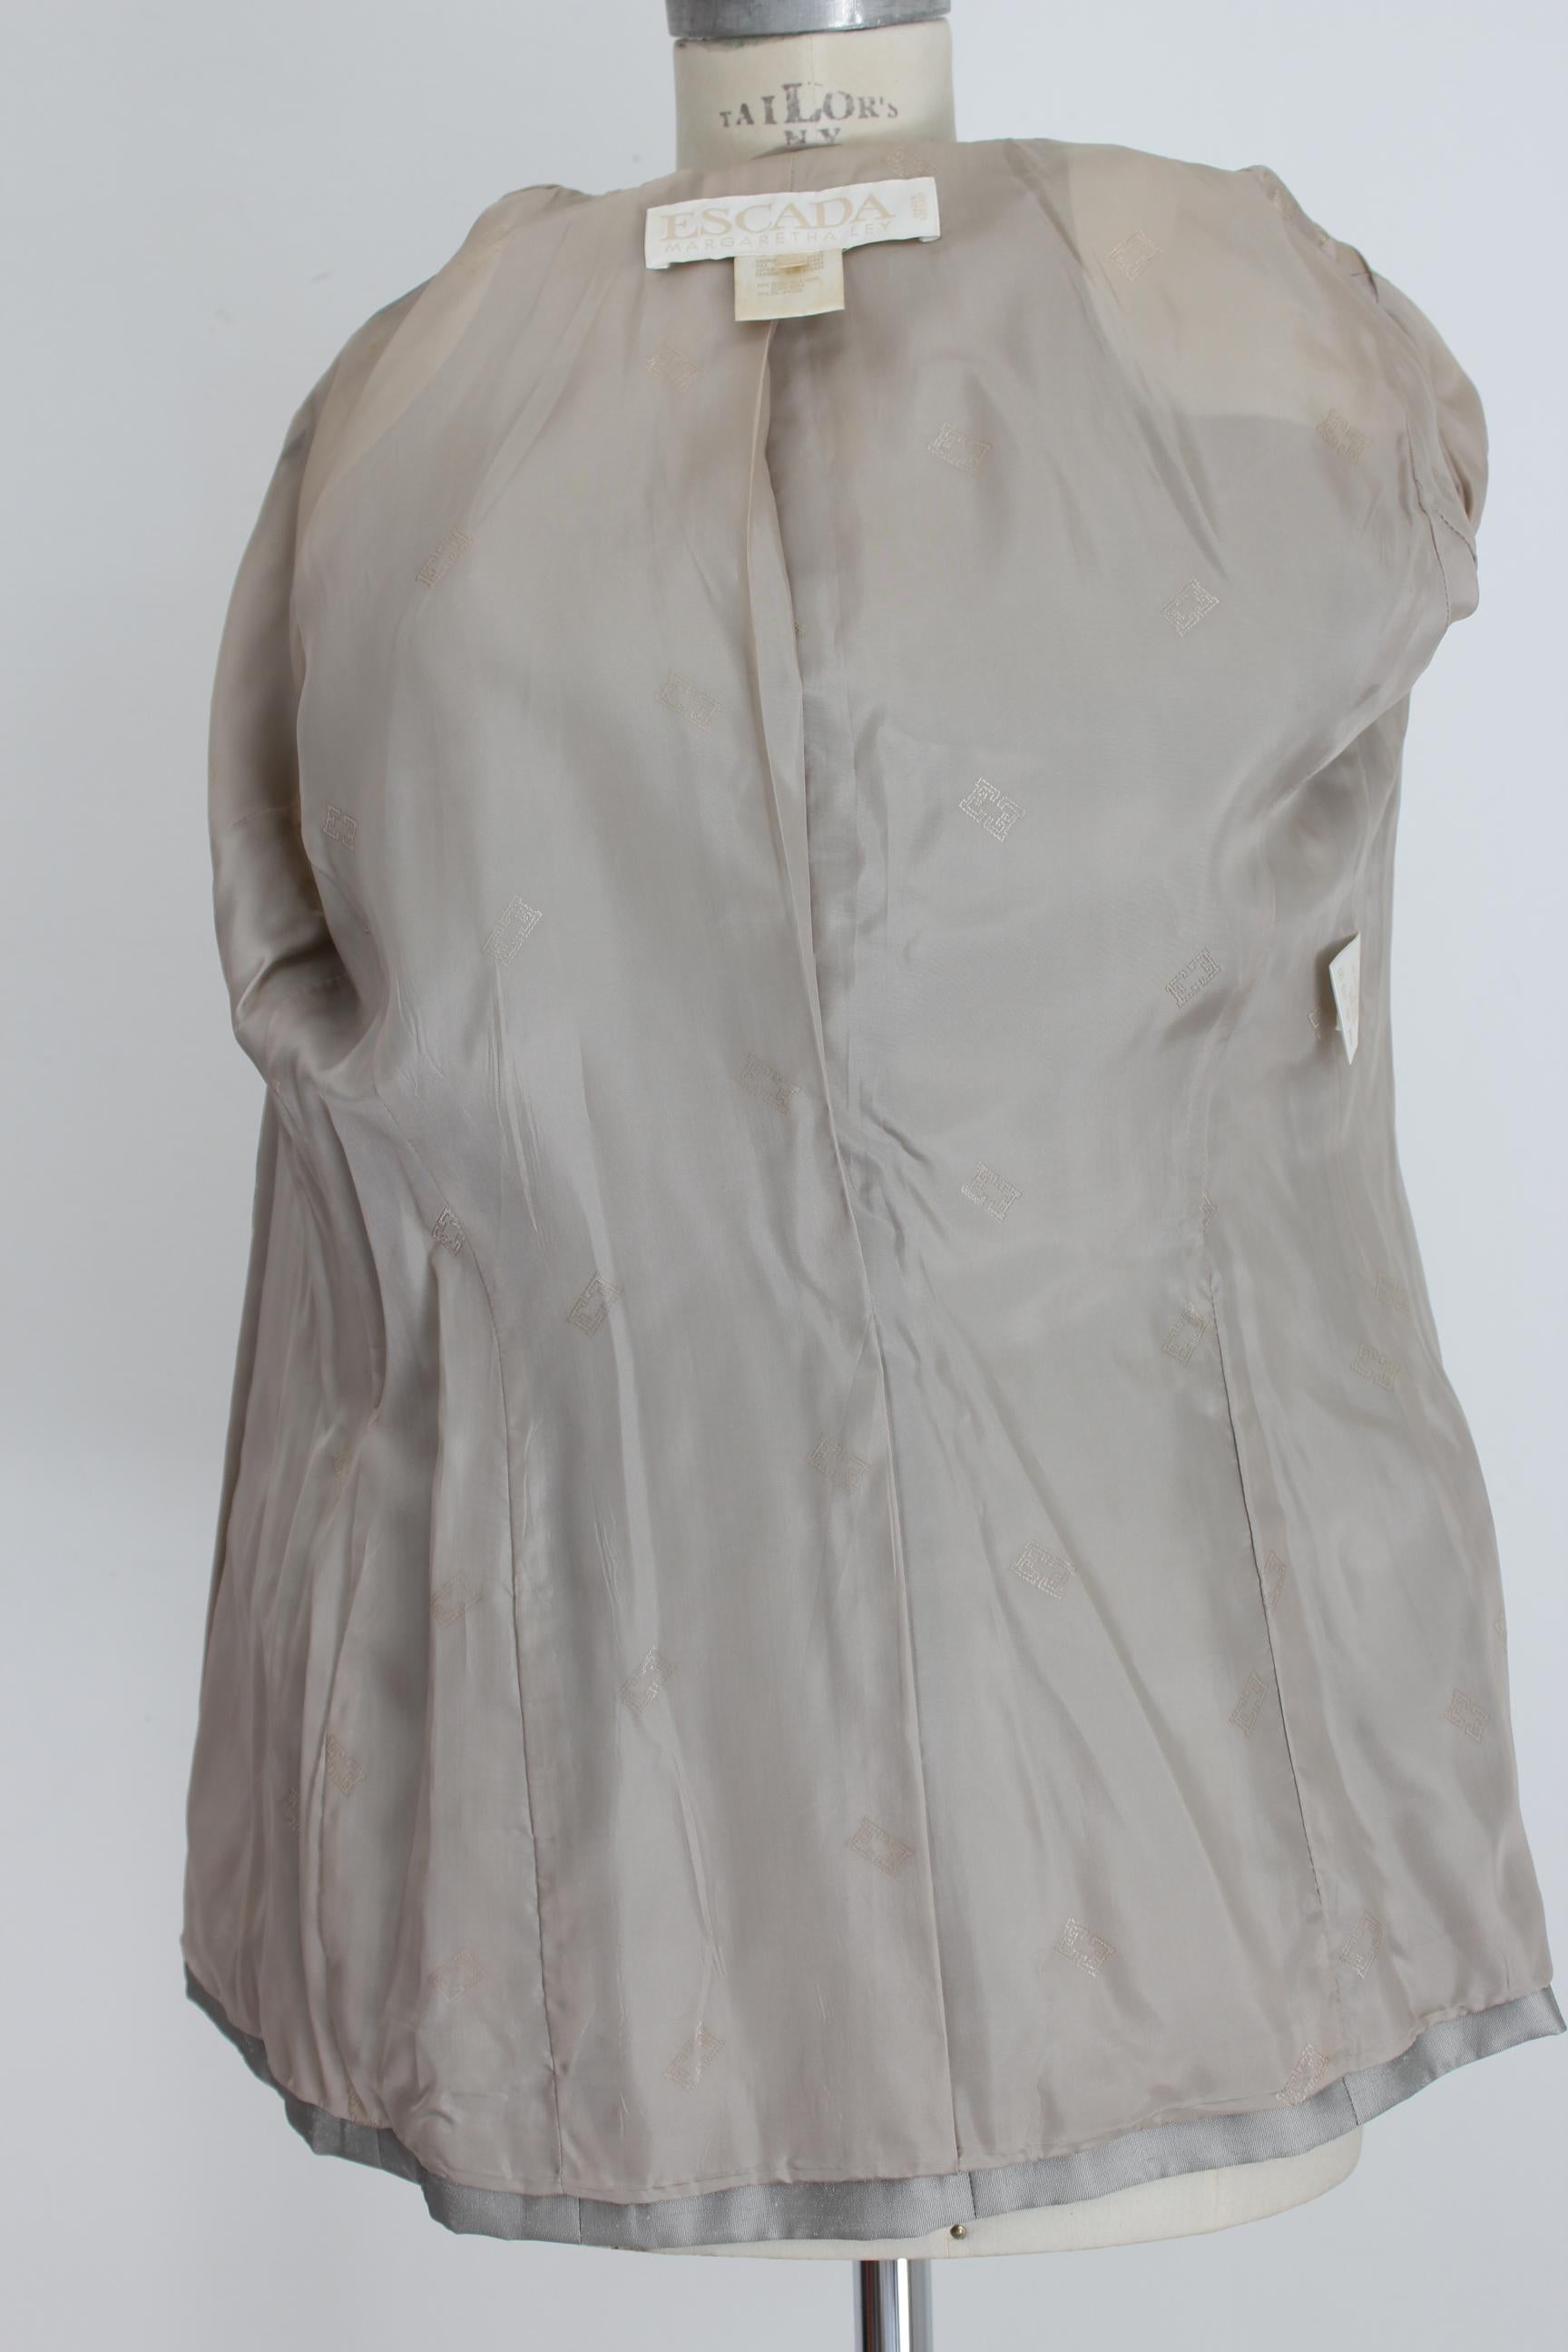 Escada Margaretha Ley Gray Silk Button Jewel Evening Structured Jacket  In Excellent Condition In Brindisi, Bt